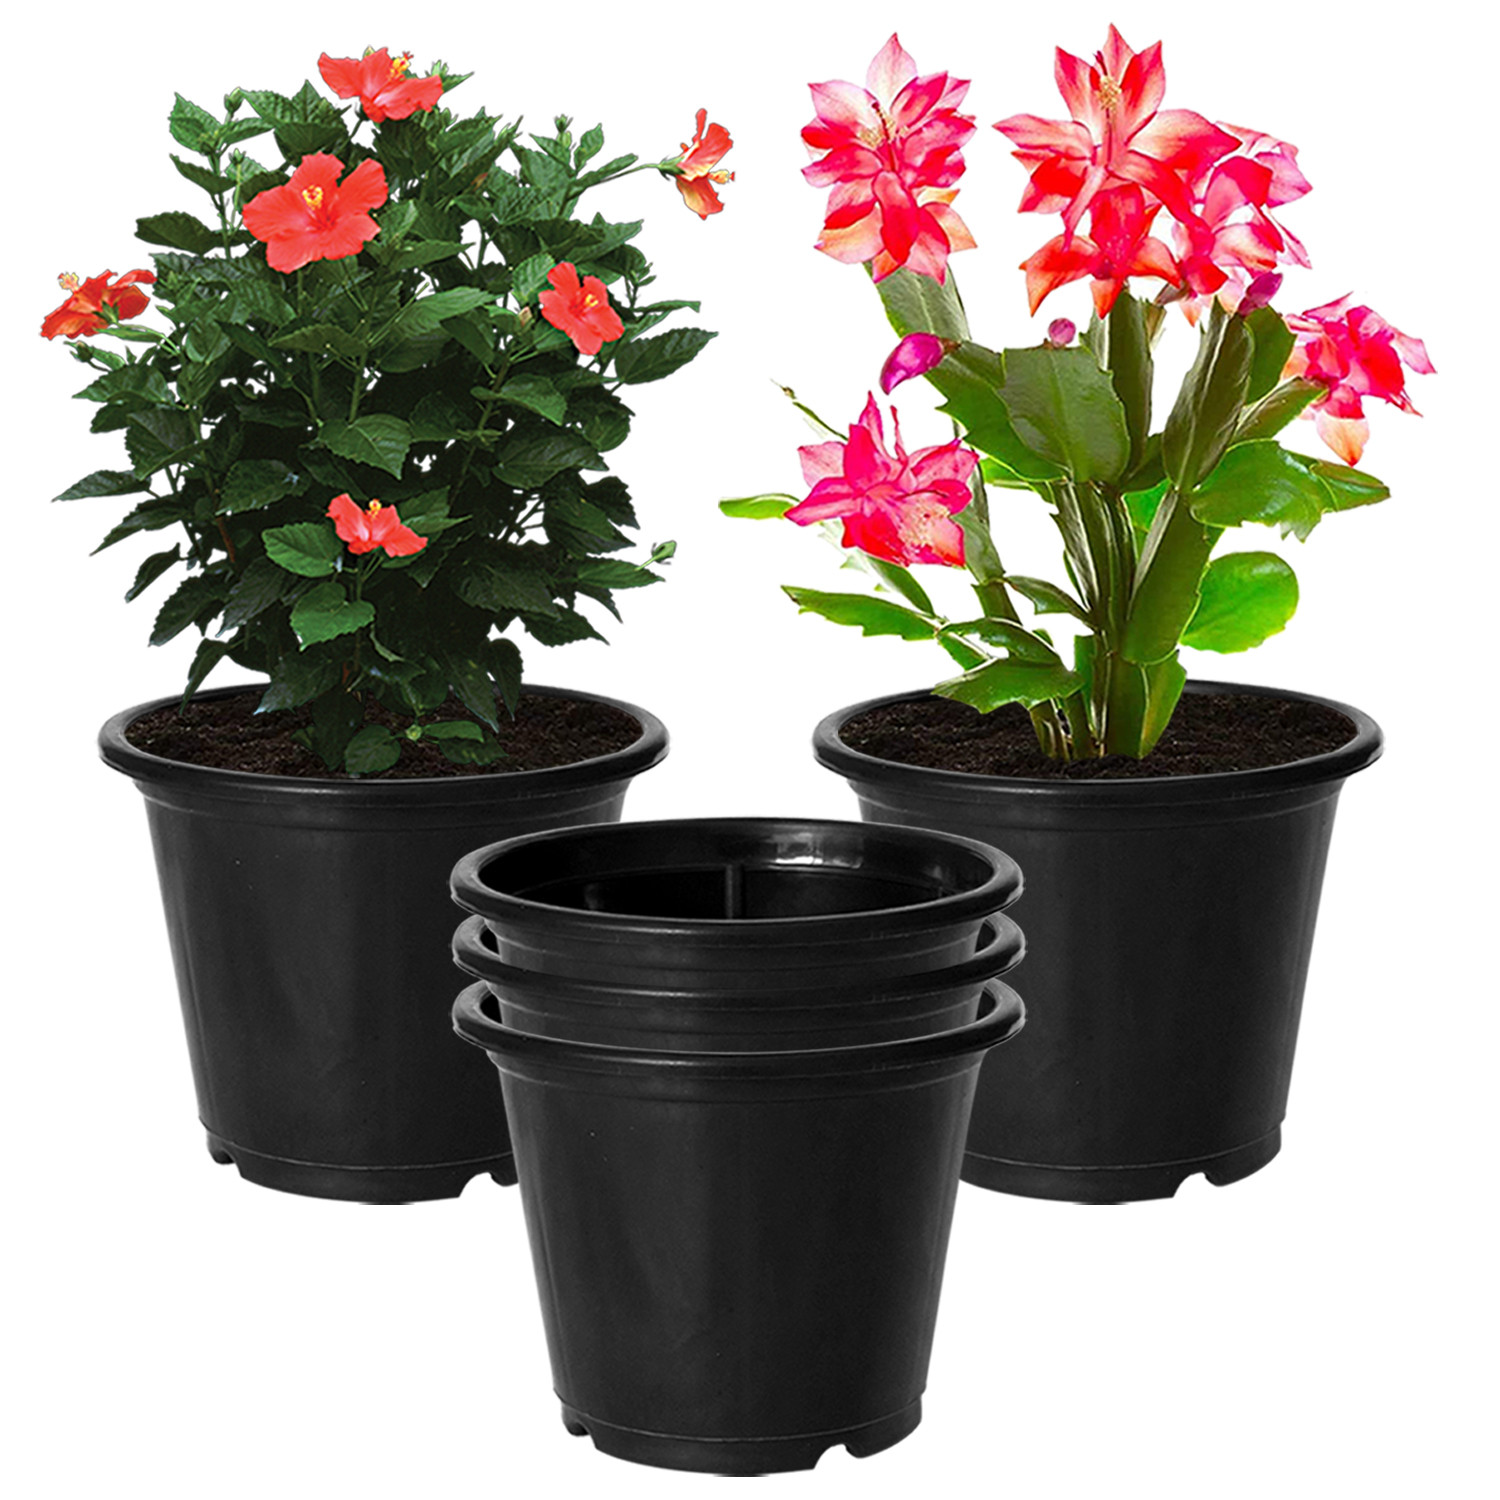 Kuber Industries Plastic Planters|Gamla|Flower Pots for Garden Nursery Home Décor,8